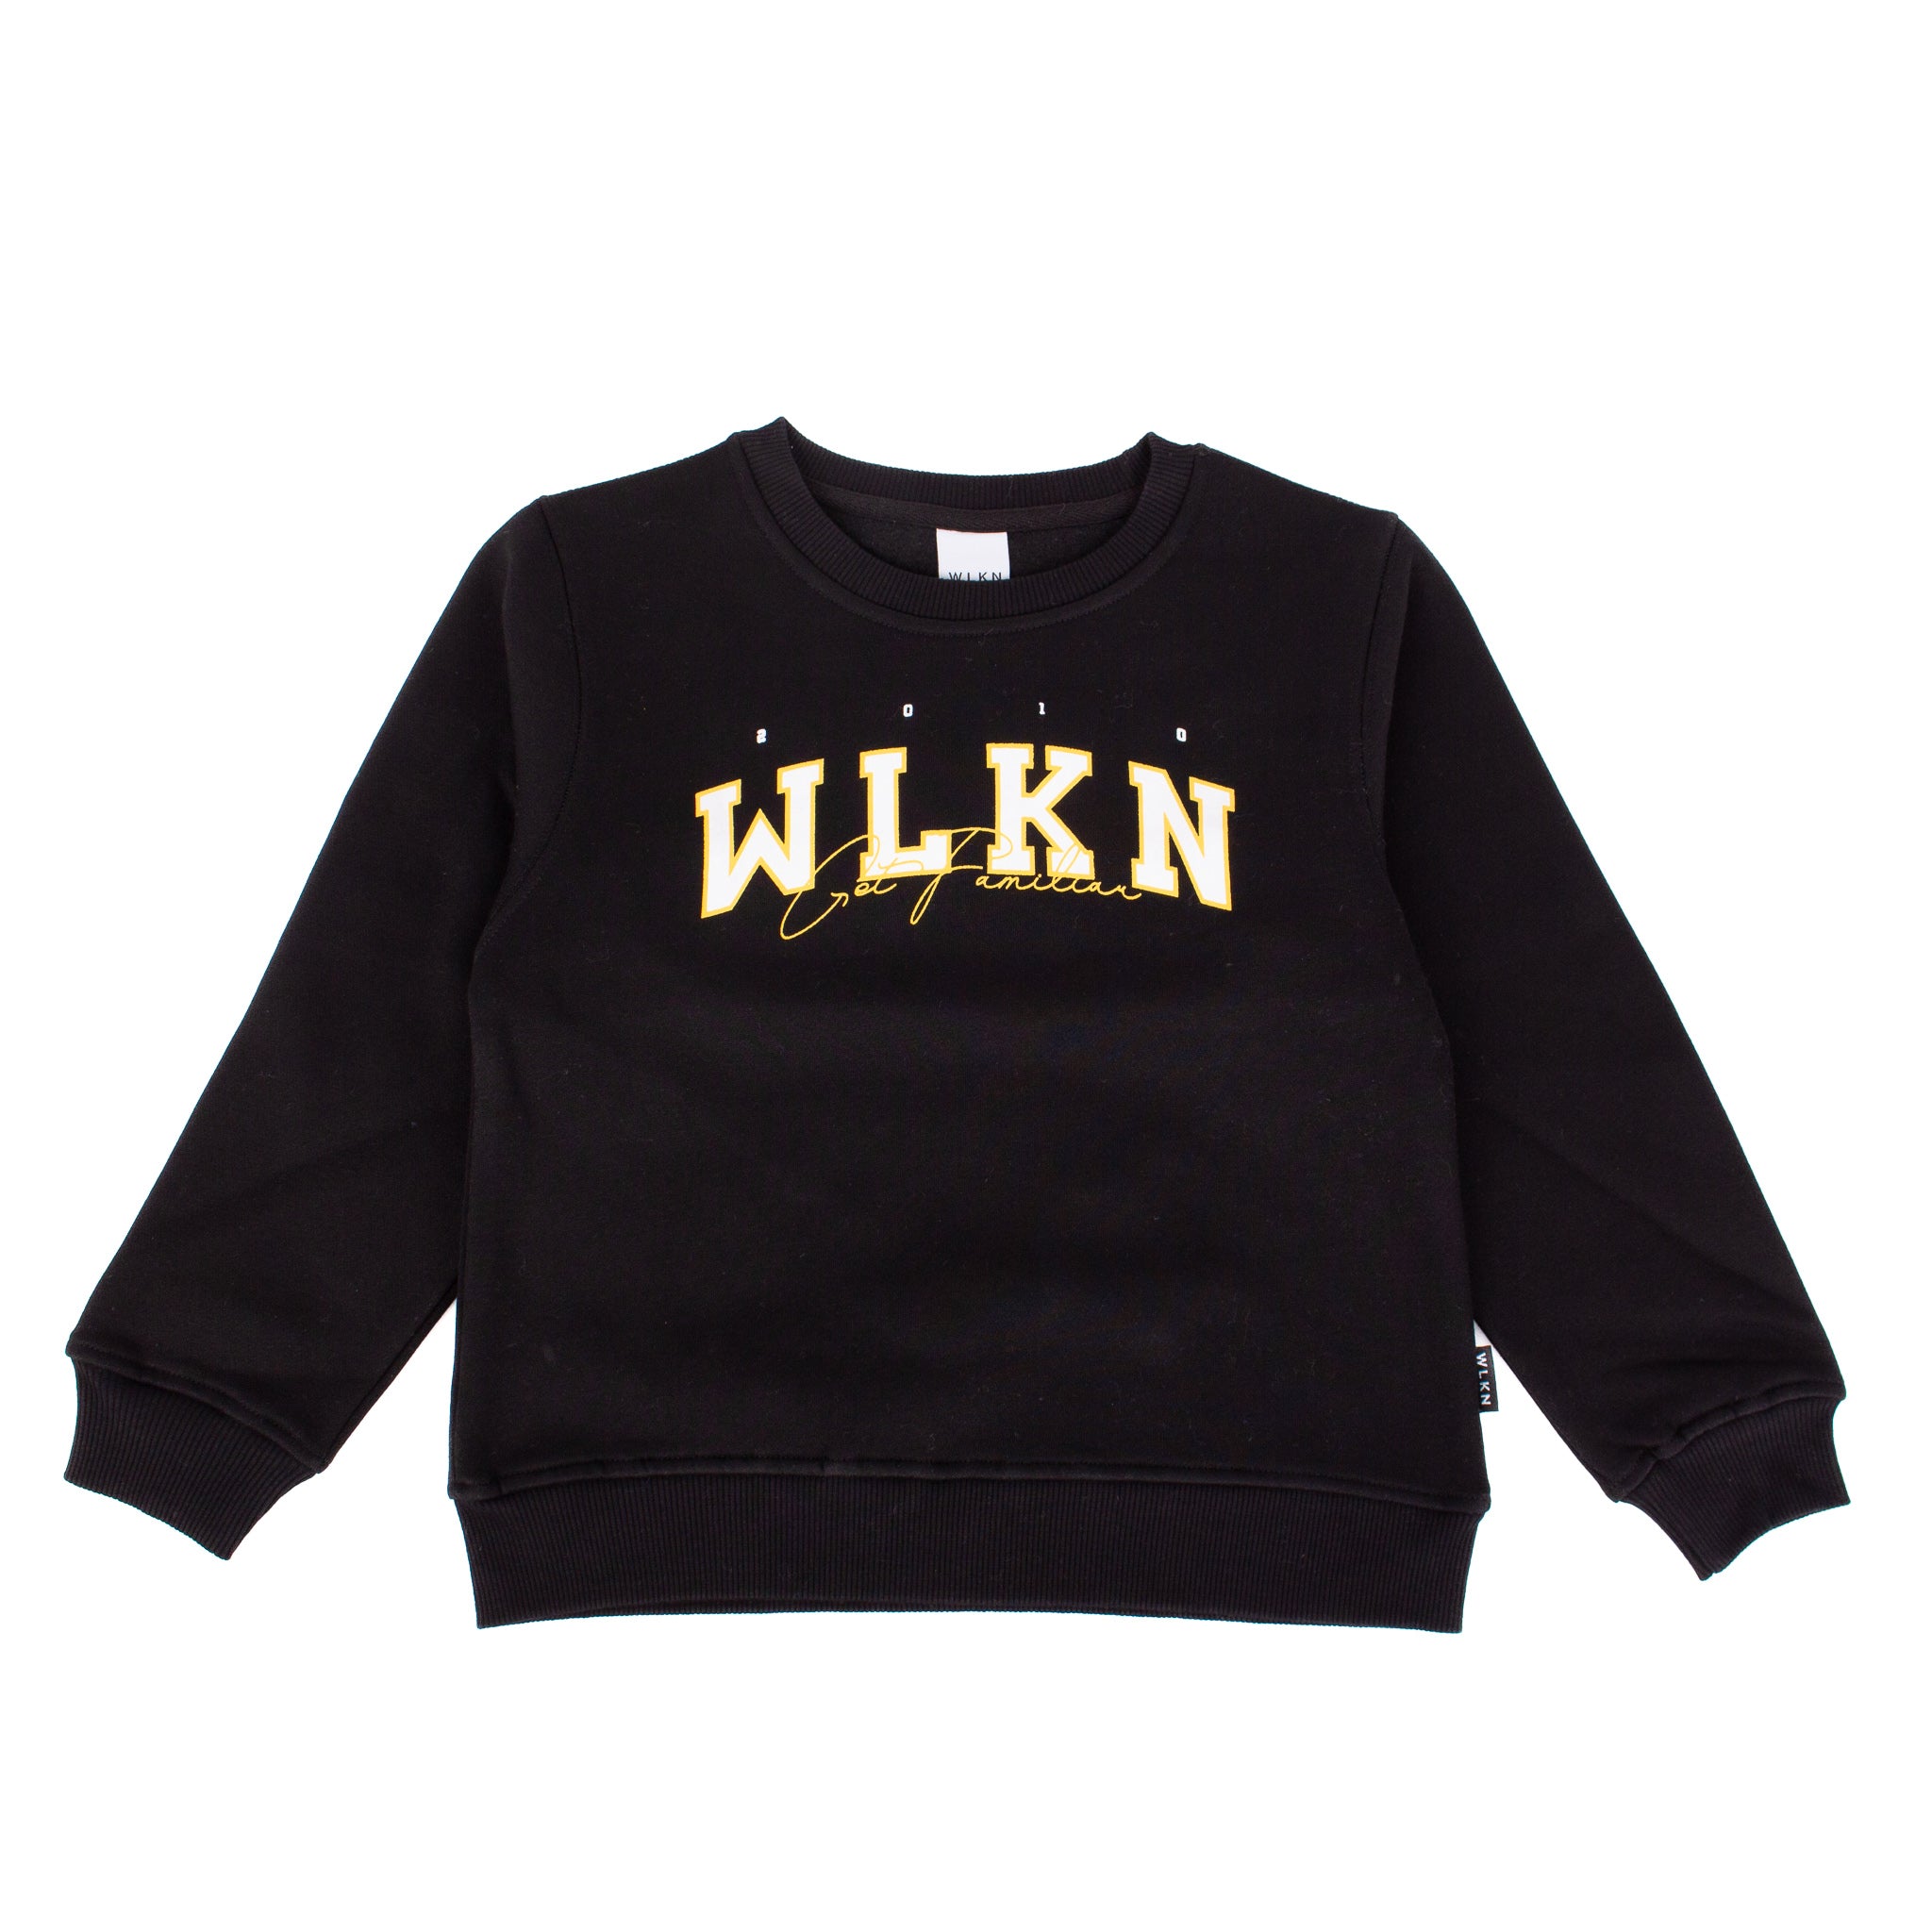 WLKN - Crewneck noir doublé en polar Get familiar